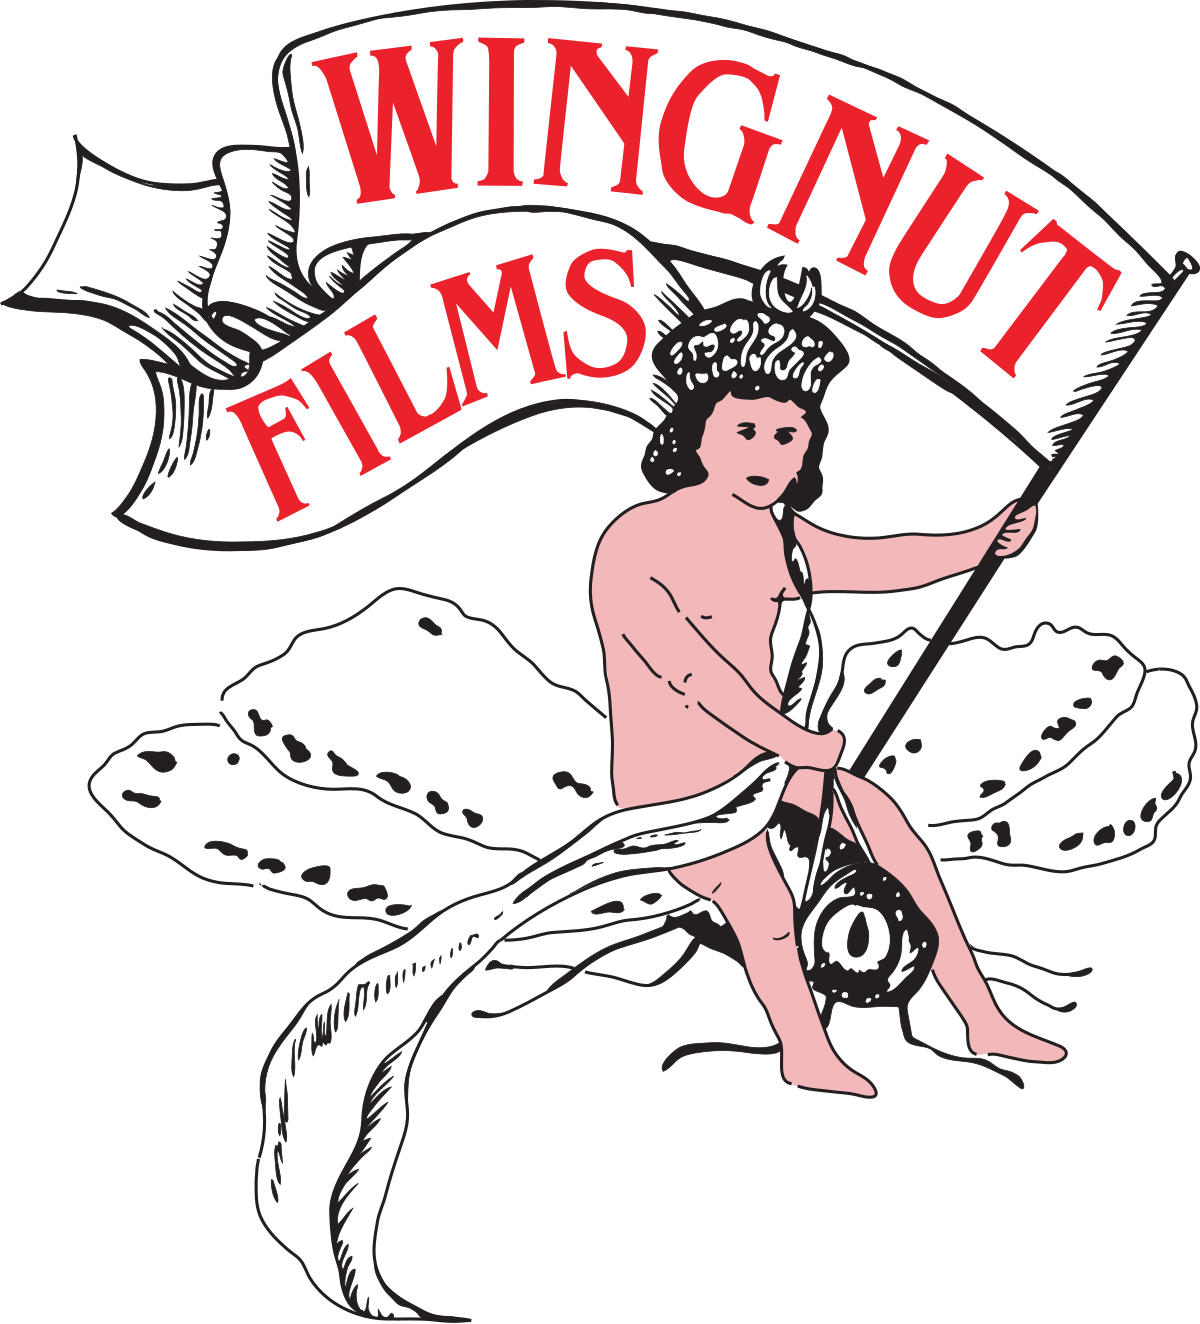 Jackson's Production Company: Wingnut Films